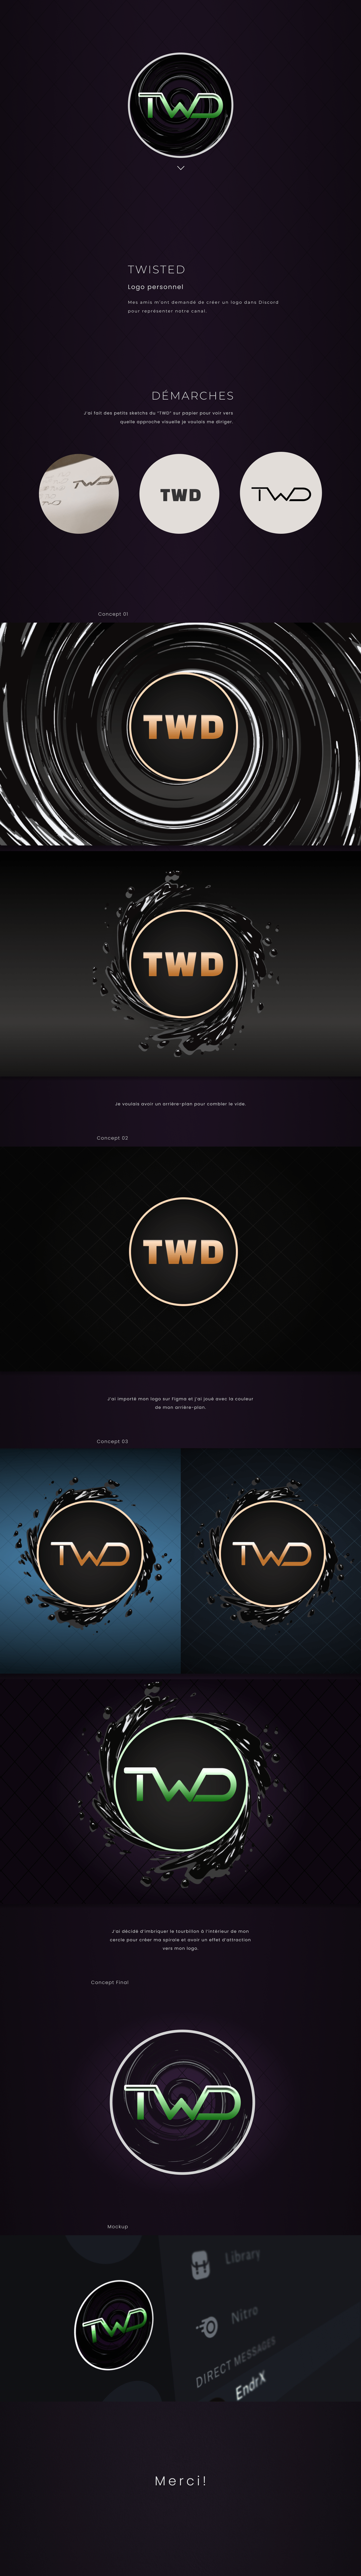 discord logo projet design Spirale tourbillon twd Twist twisted